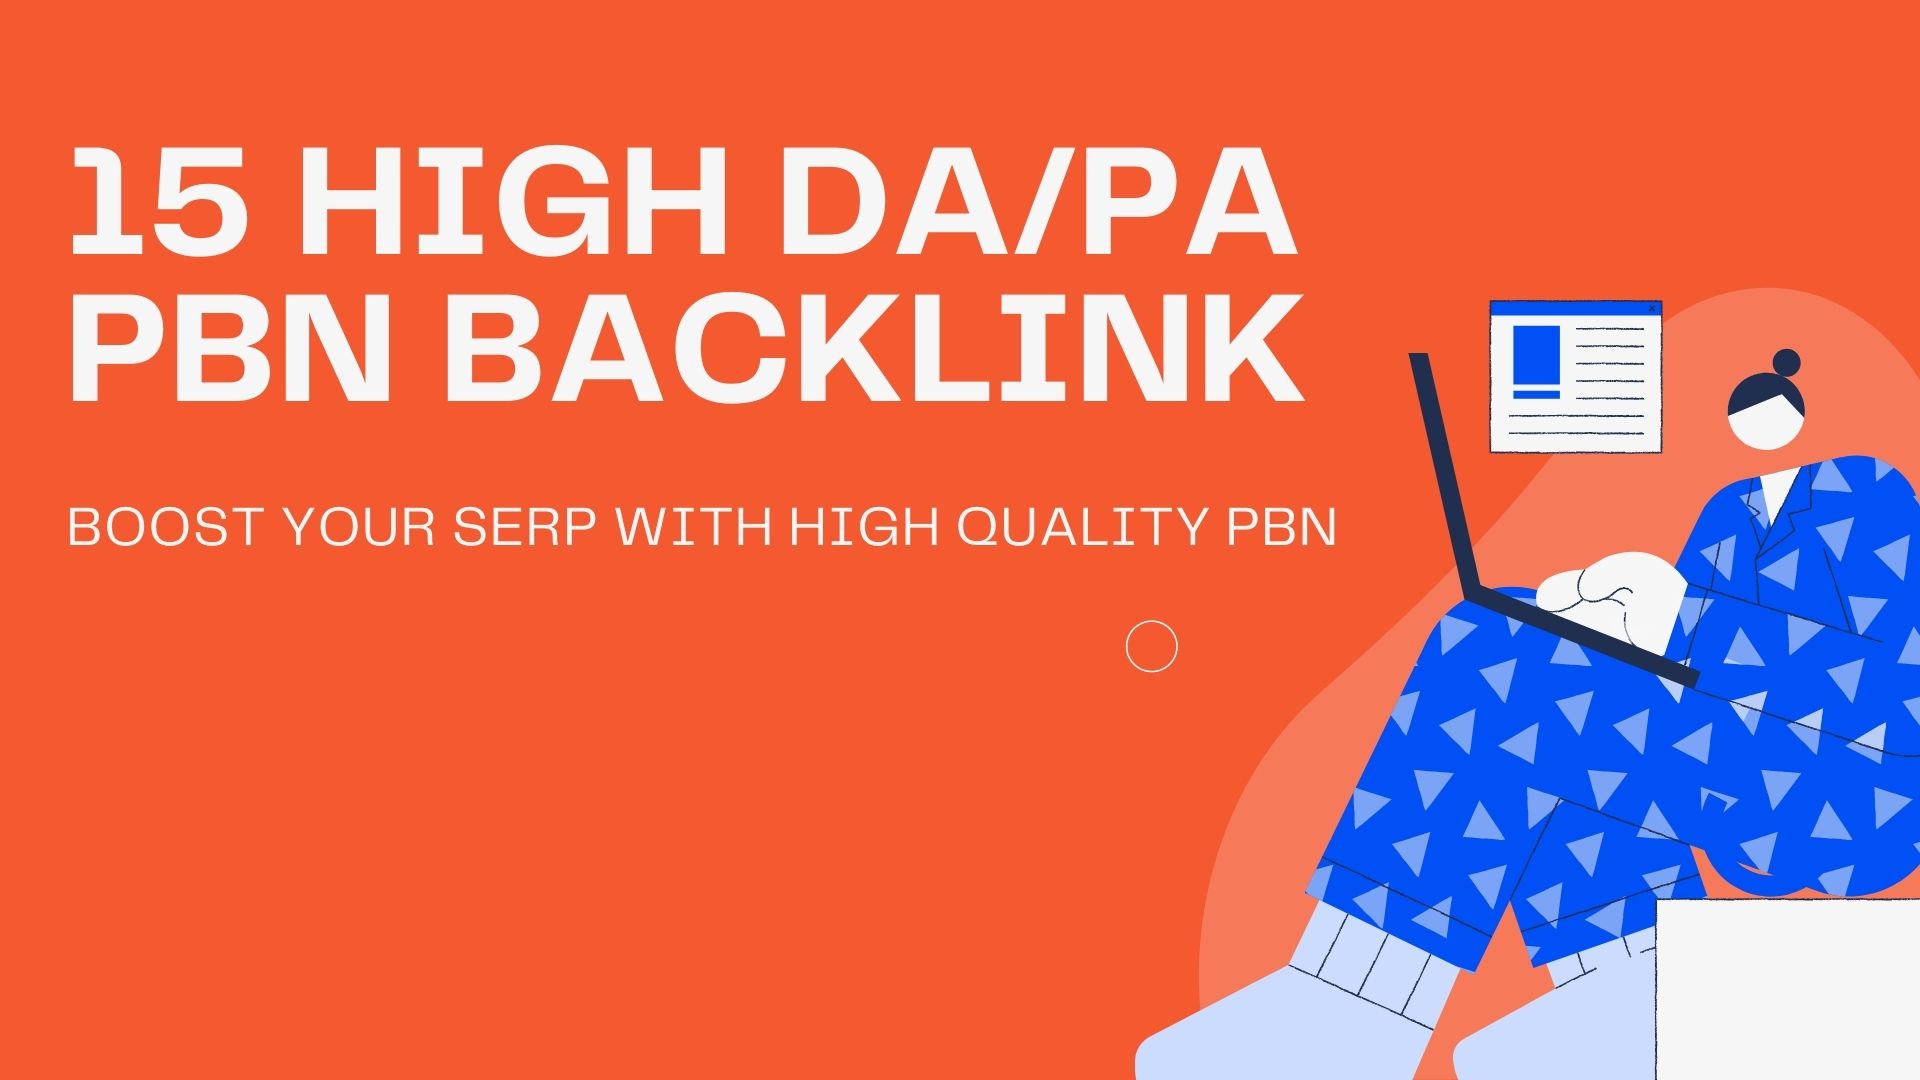 Build 15 HIGH DA PA Dofollow PBN Backlinks - Boost Your SERP